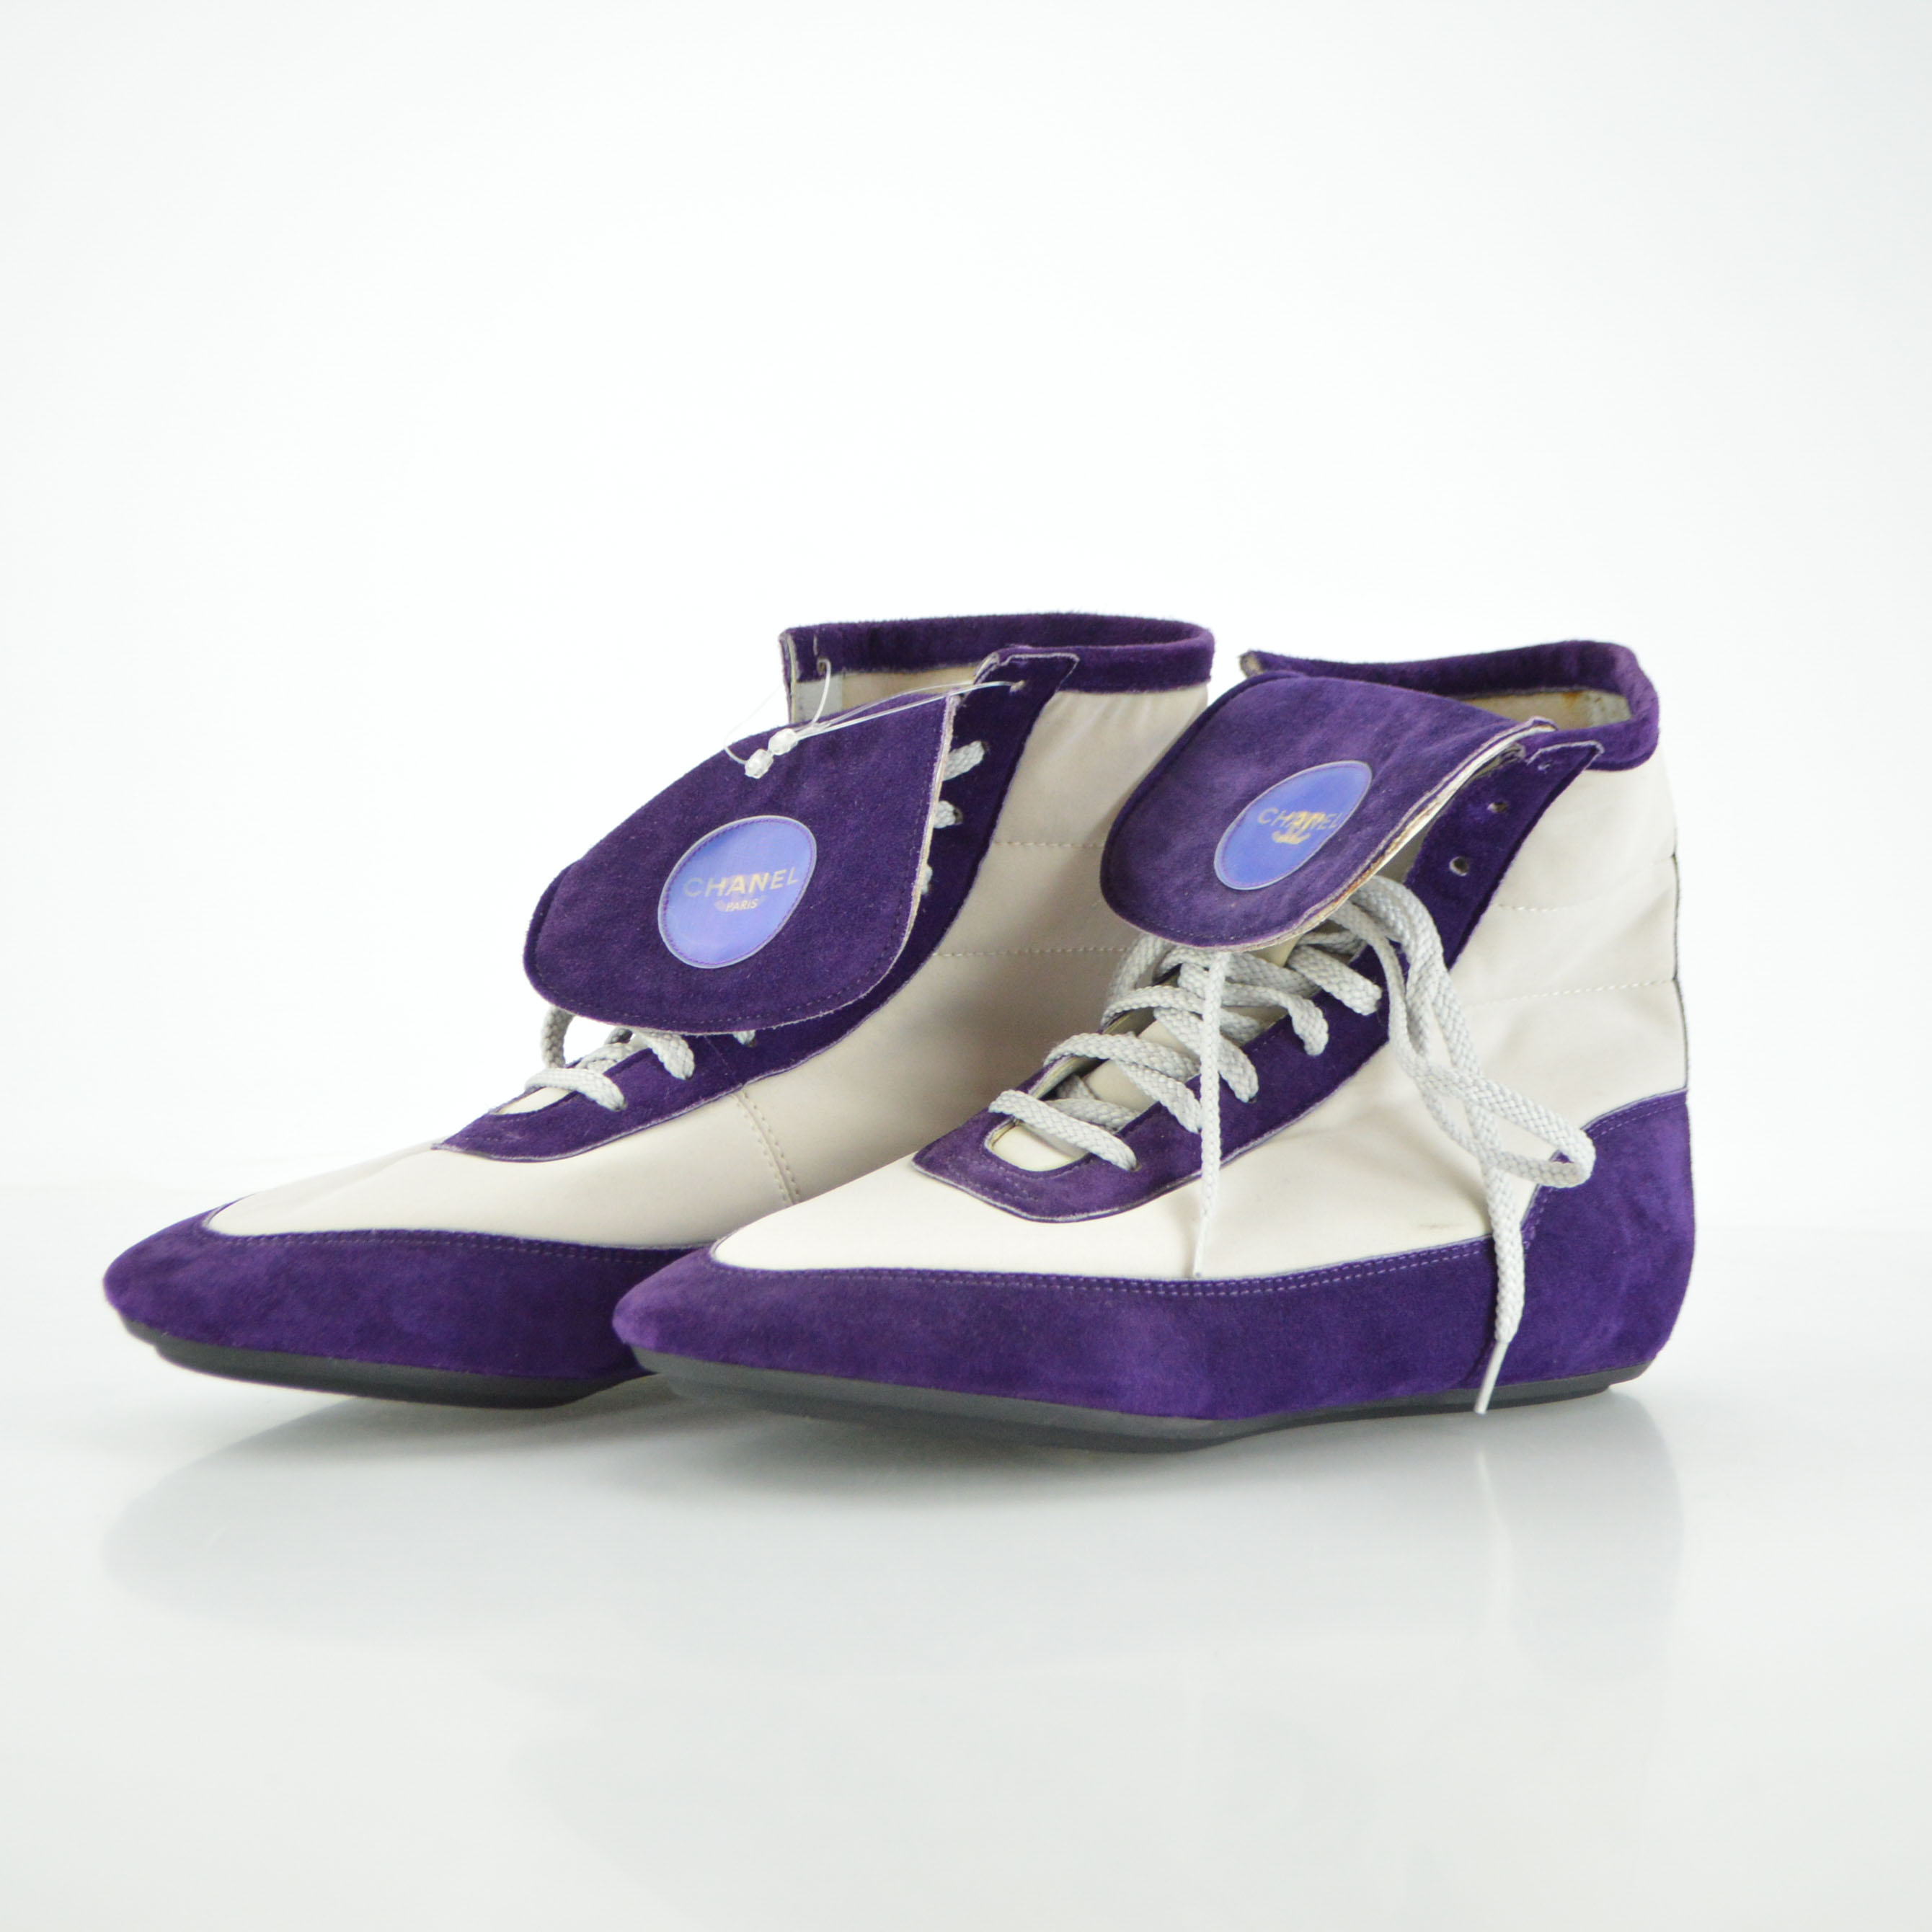 CHANEL Nylon Lambskin Suede Calfskin CC Sneakers 37 Green Purple Pink  1245267  FASHIONPHILE